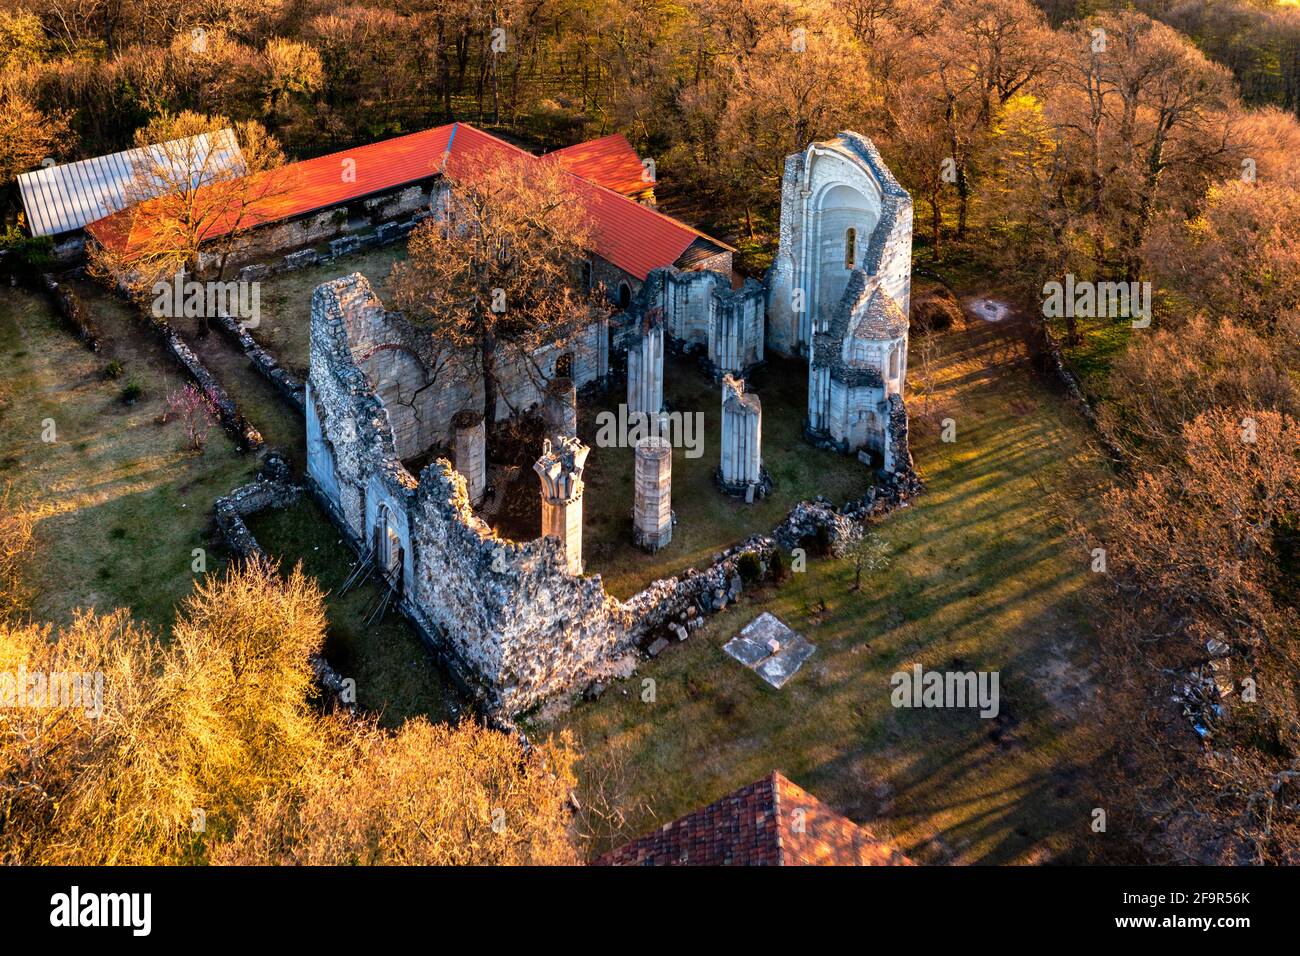 Benedictine abbey church ruins in Vertesszentkereszt Hungary. This. roman style church built in 10th century, destroyed in 13th century. Stock Photo